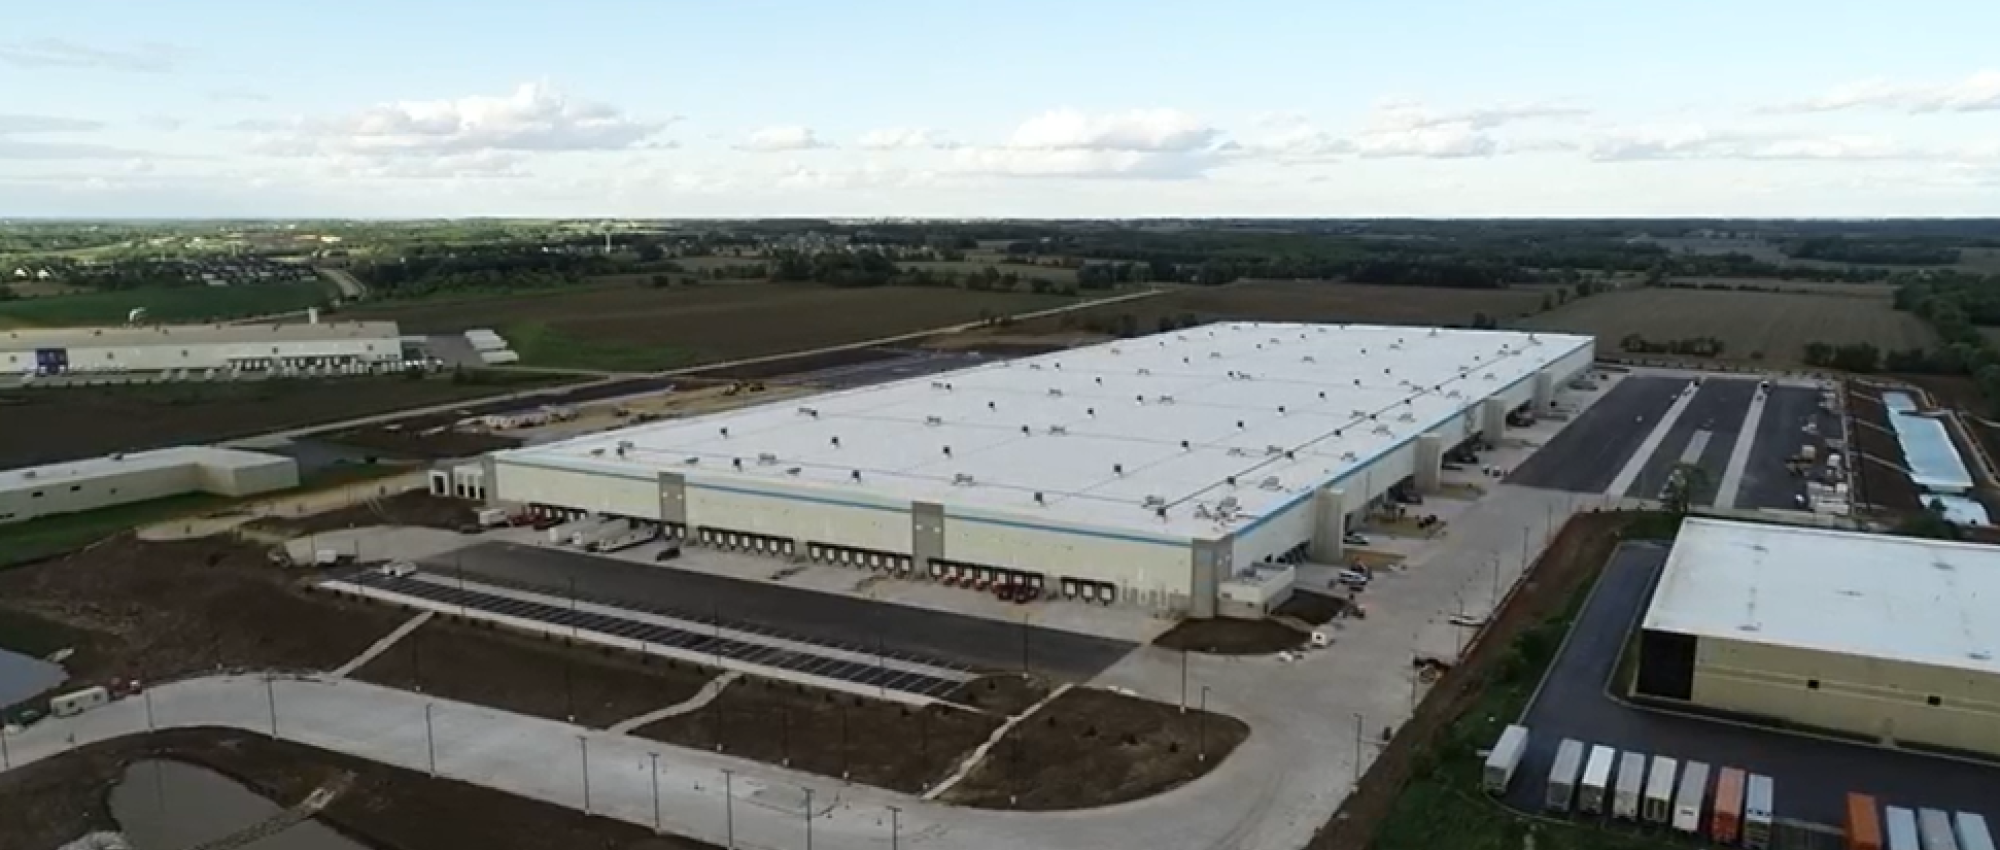 Amazon Warehouse in Beloit, Wisconsin